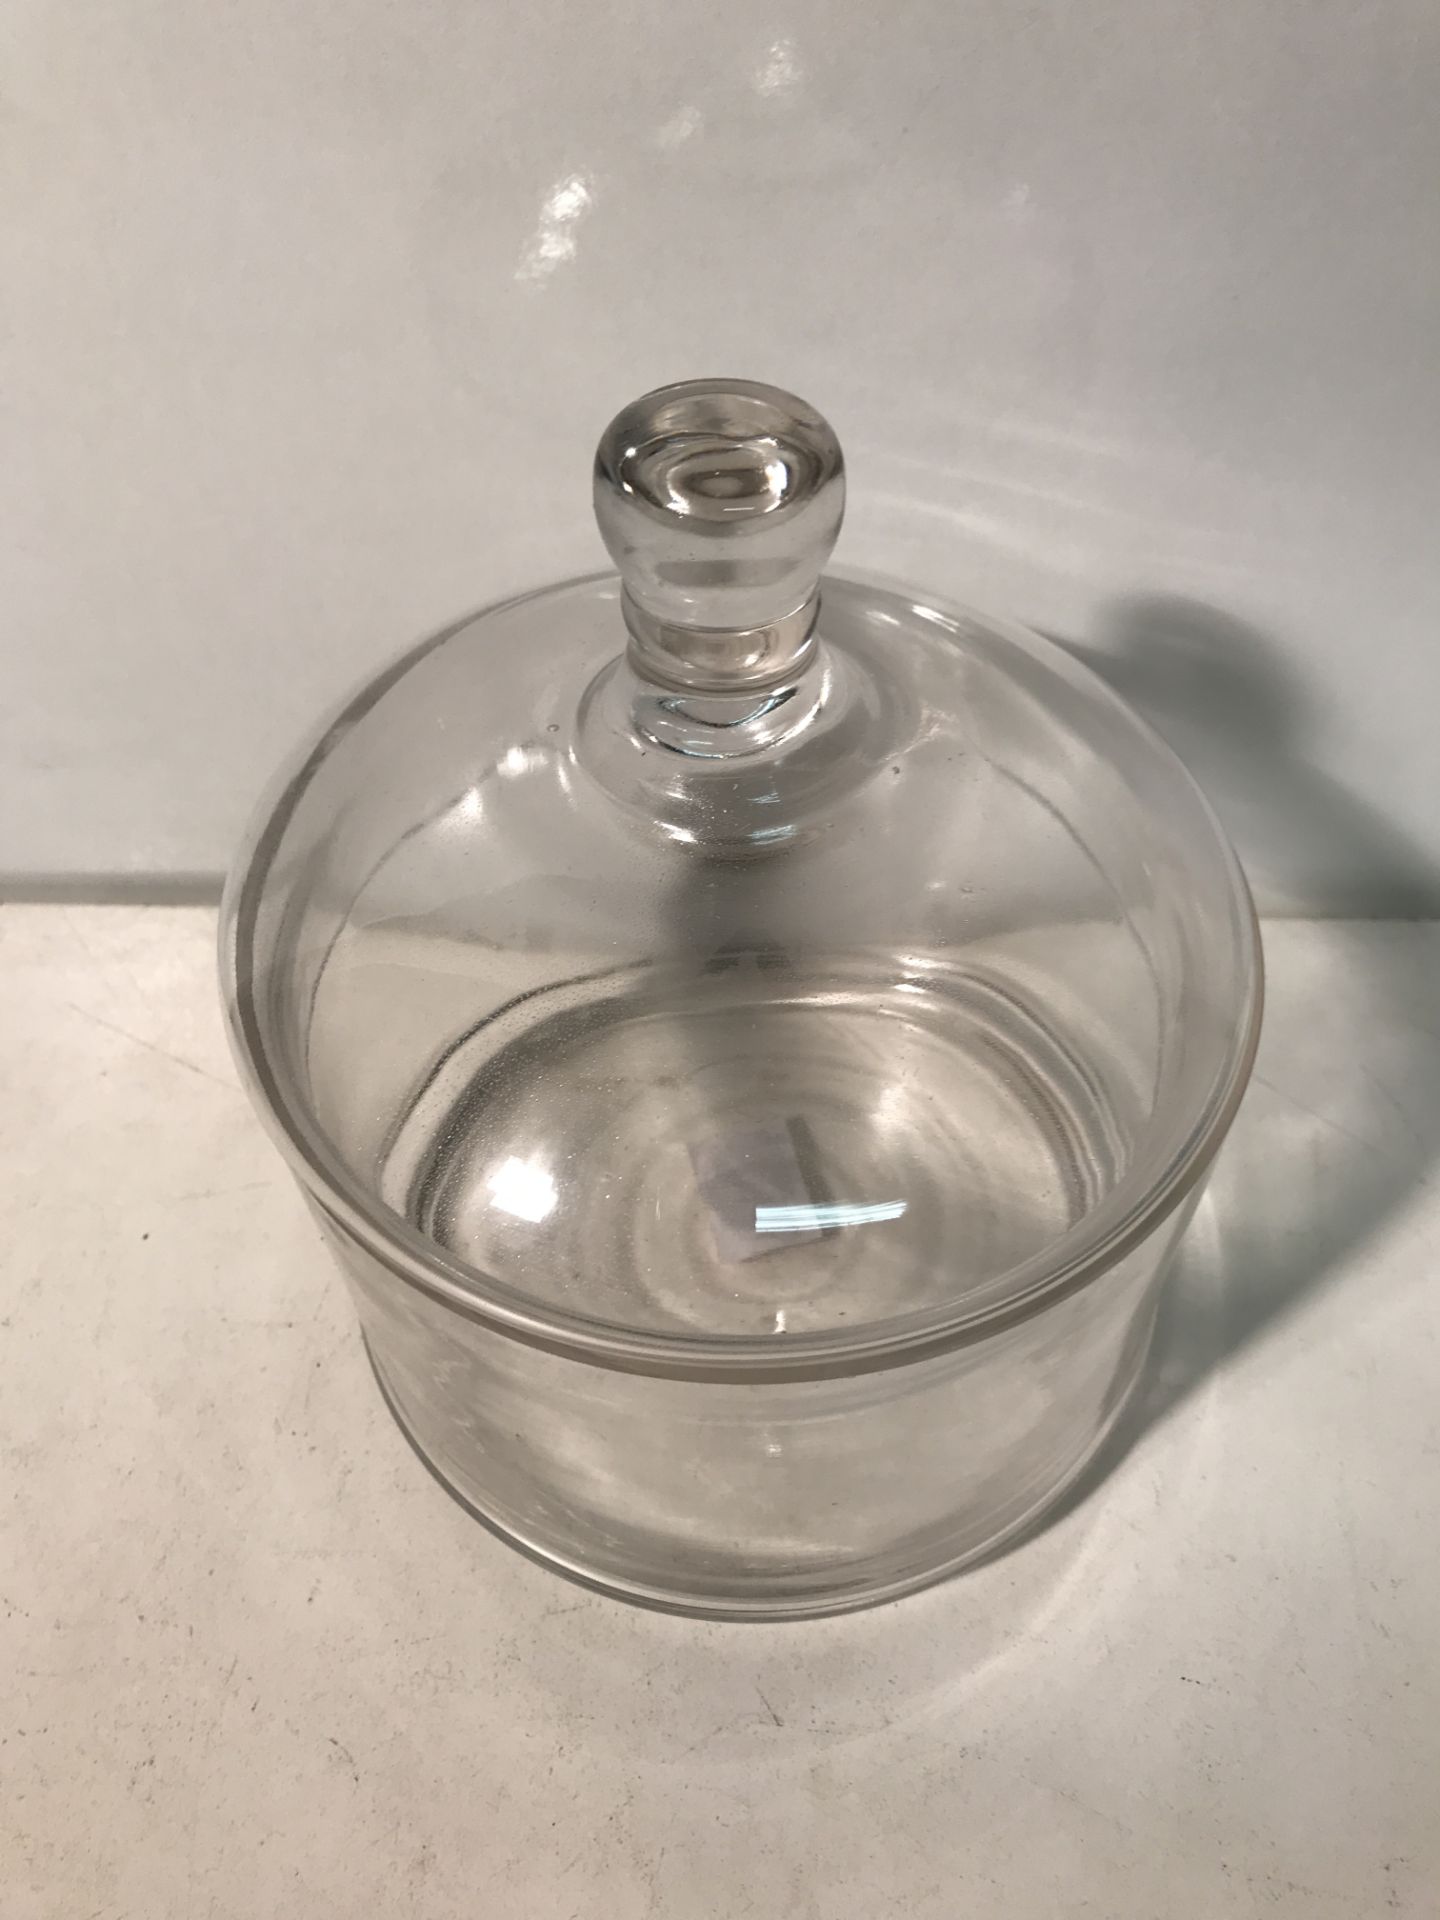 8 x Glass Bonbon Jars with Lids - Image 4 of 4